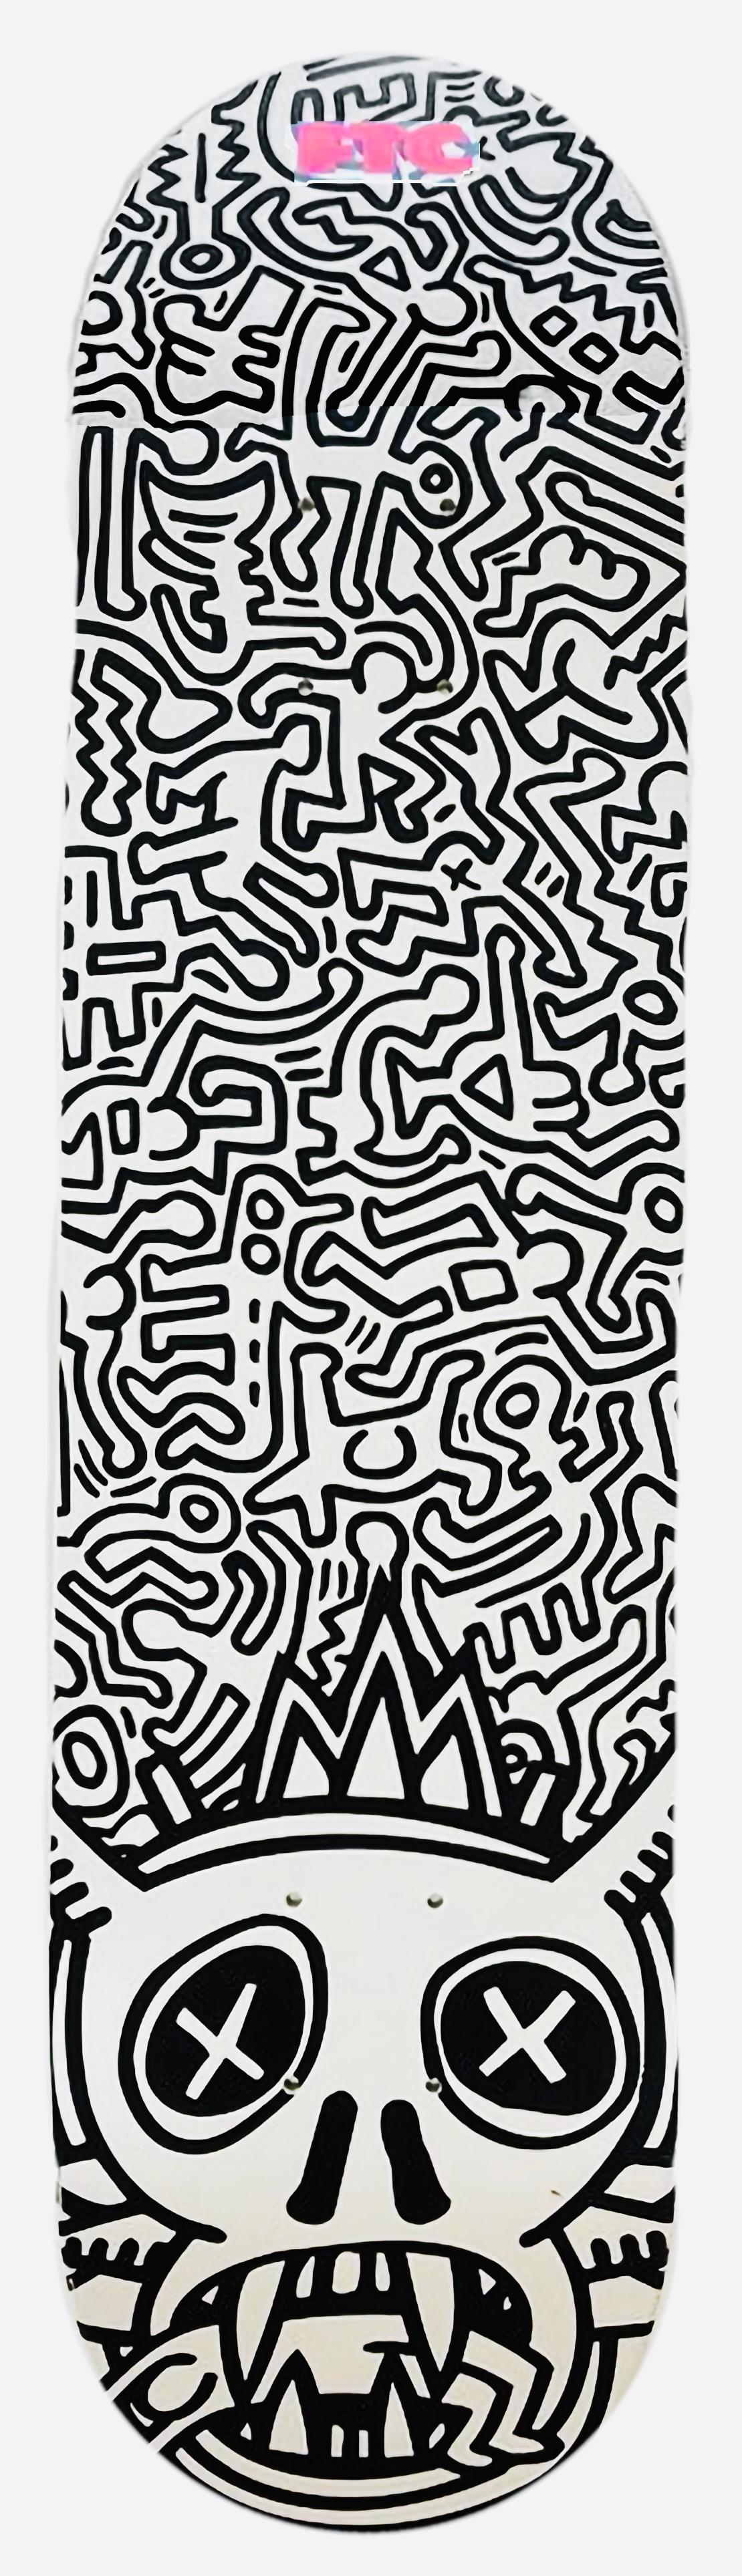 Animal Print (after) Keith Haring - Voiture de skateboard vintage Keith Haring (Keith Haring Voiture de skateboard)